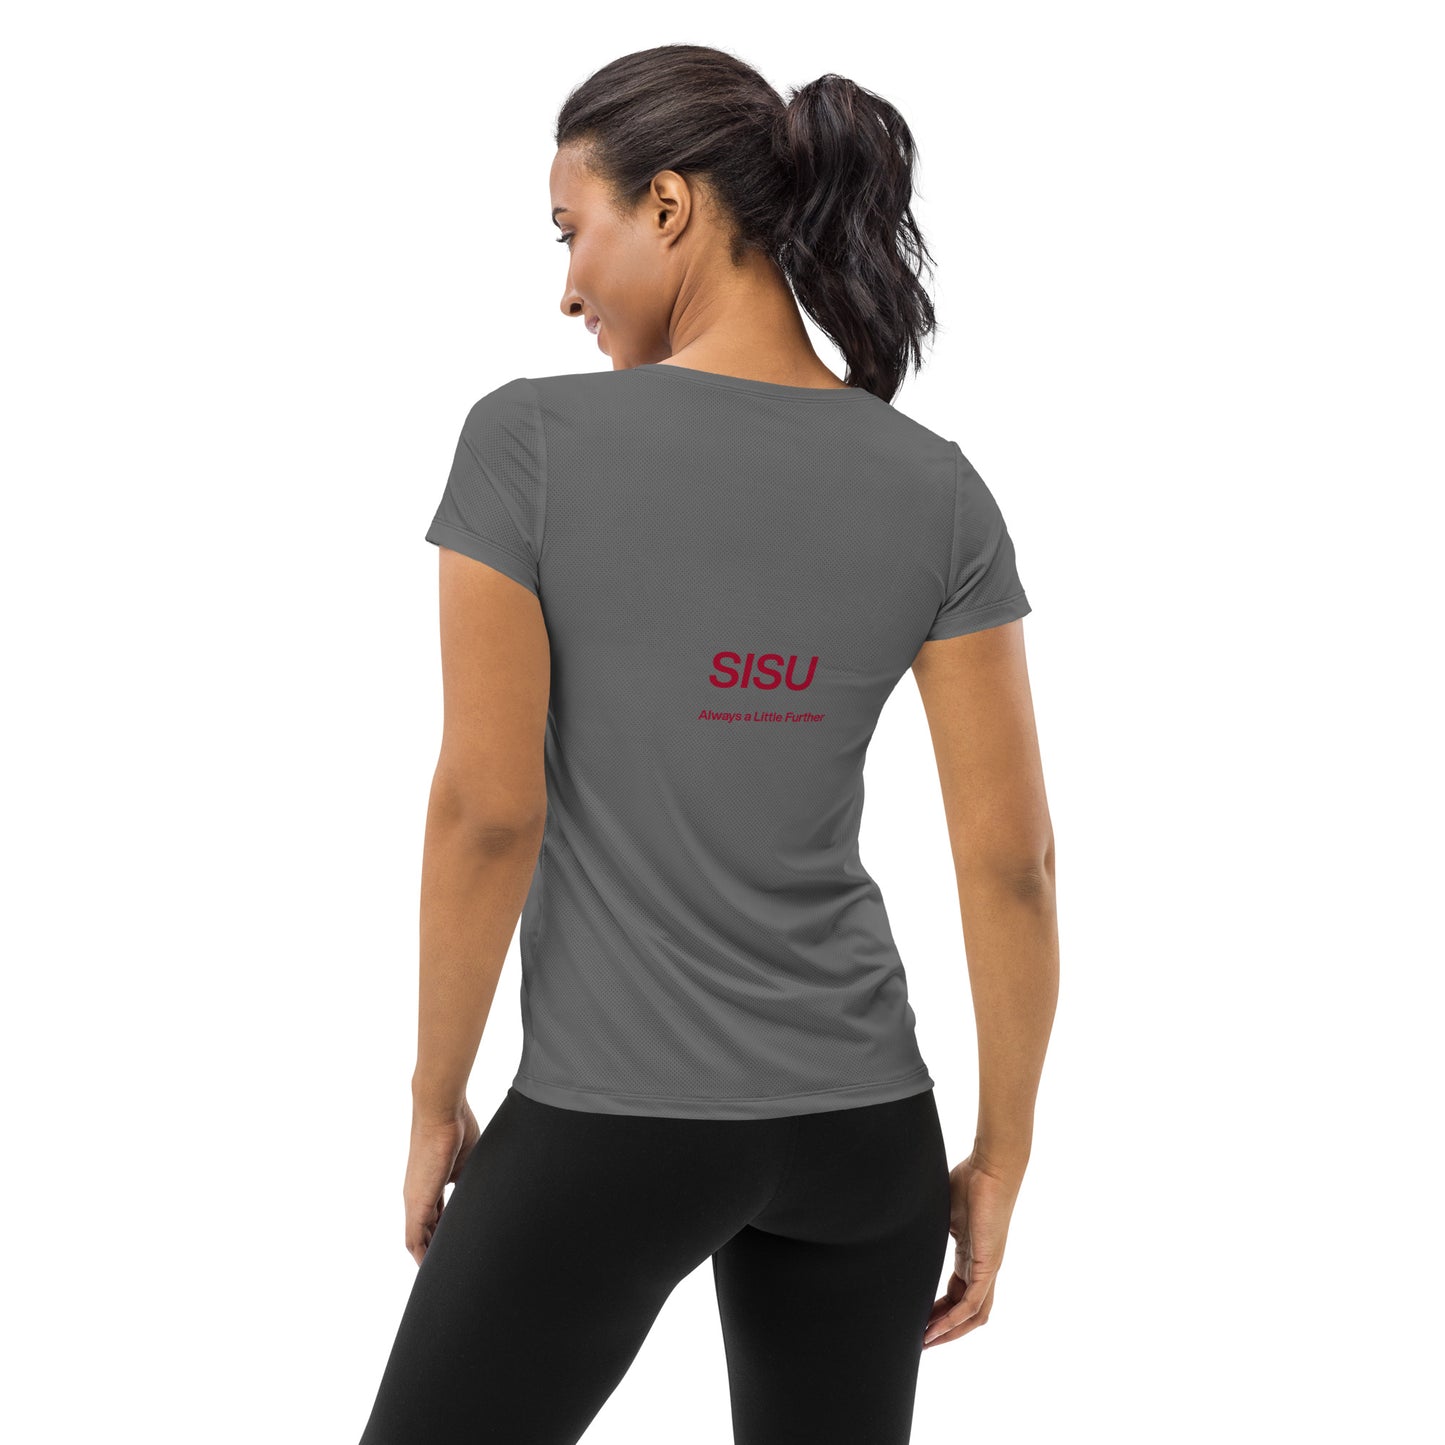 SISU -  Women's Athletic T-shirt - Light  Green